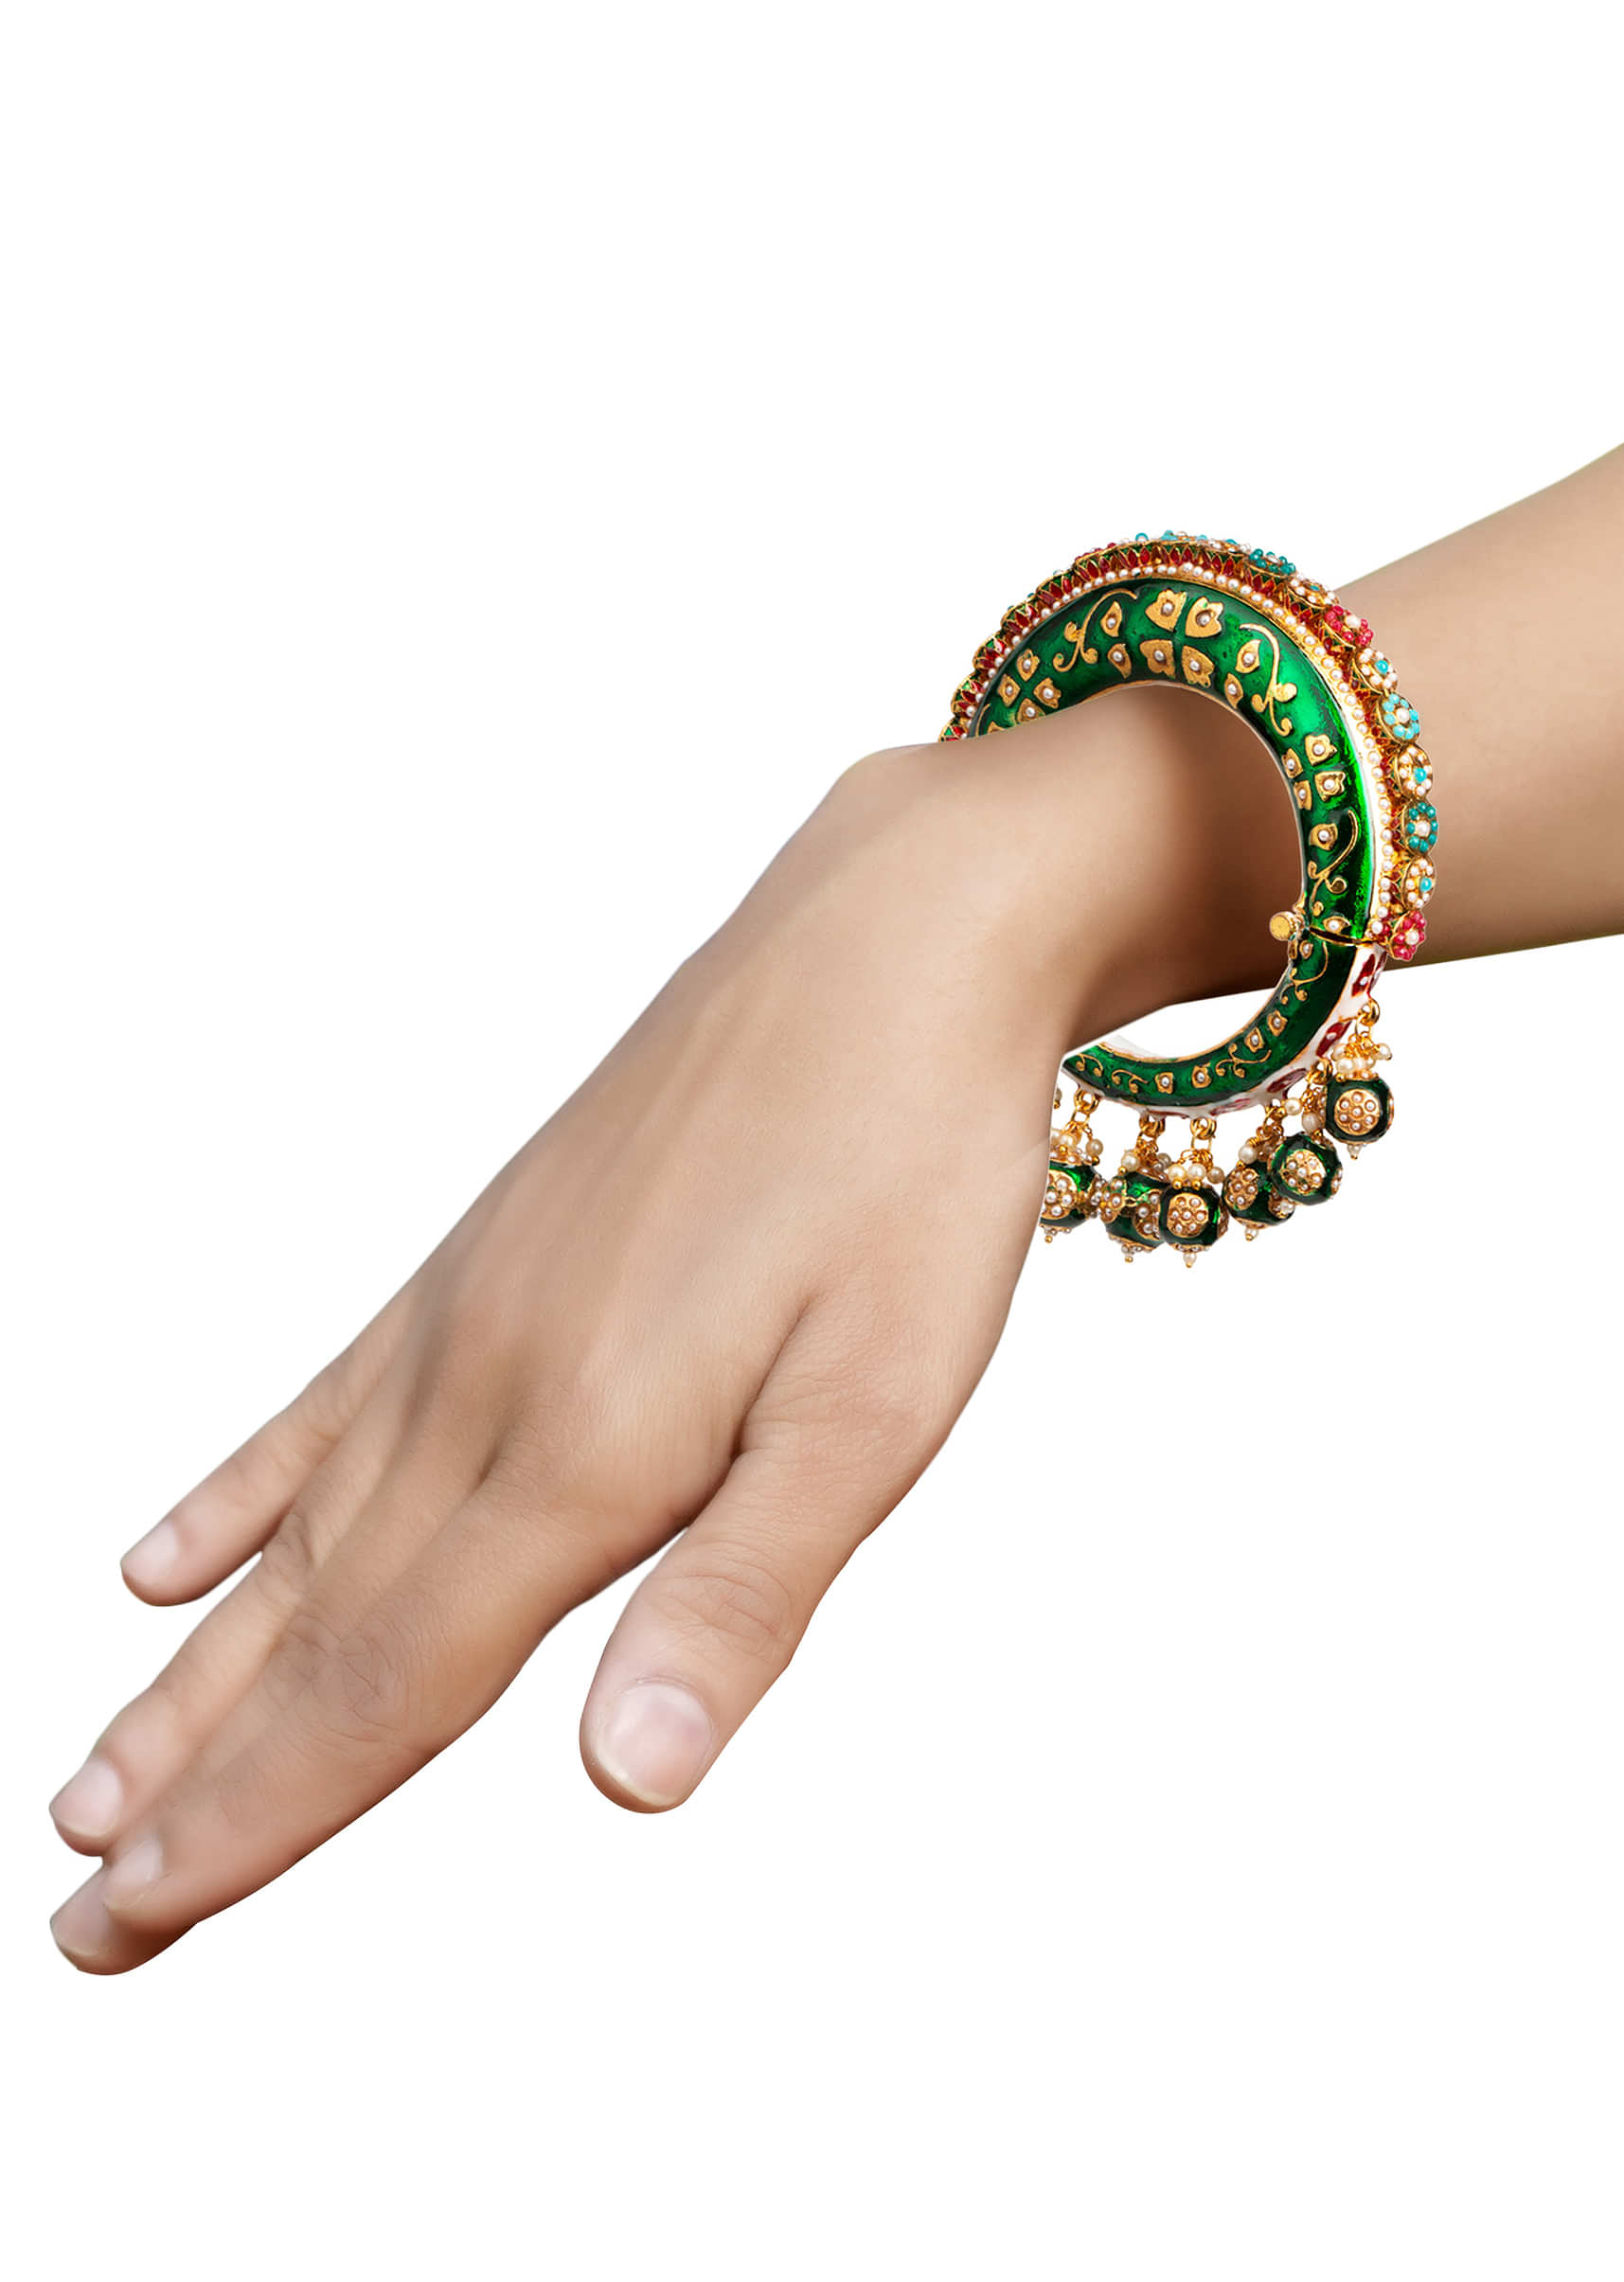 Gold Plated Rajwada Pacheli Bangle With Minakari Hangings, Colorful Stones And Pearls By Tizora